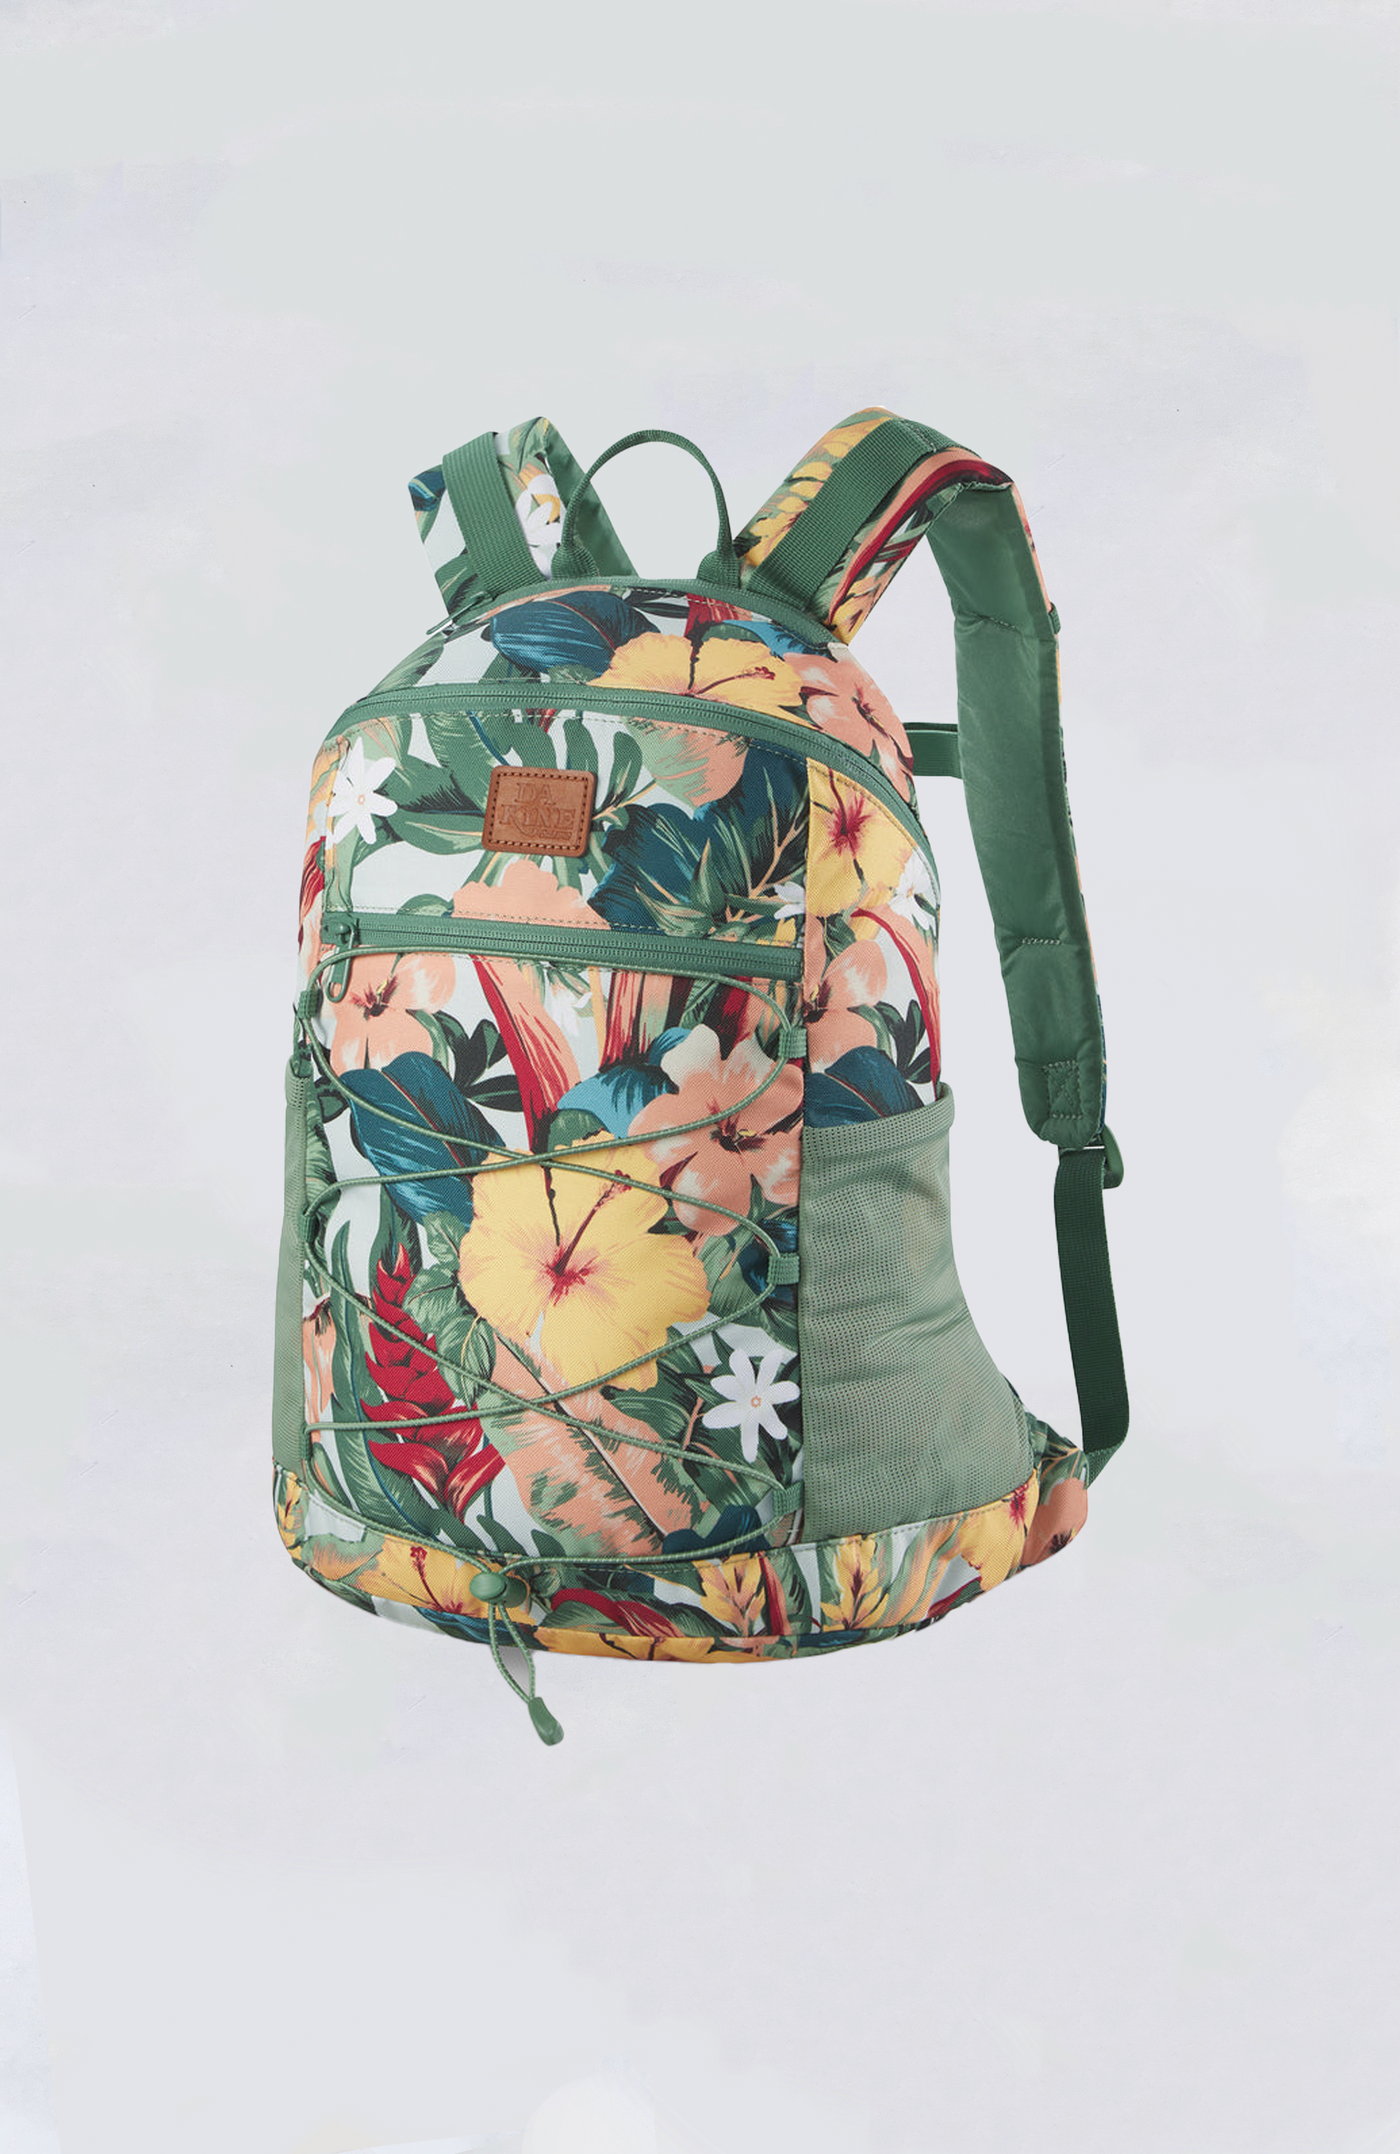 Dakine - WNDR Pack 18L Backpack